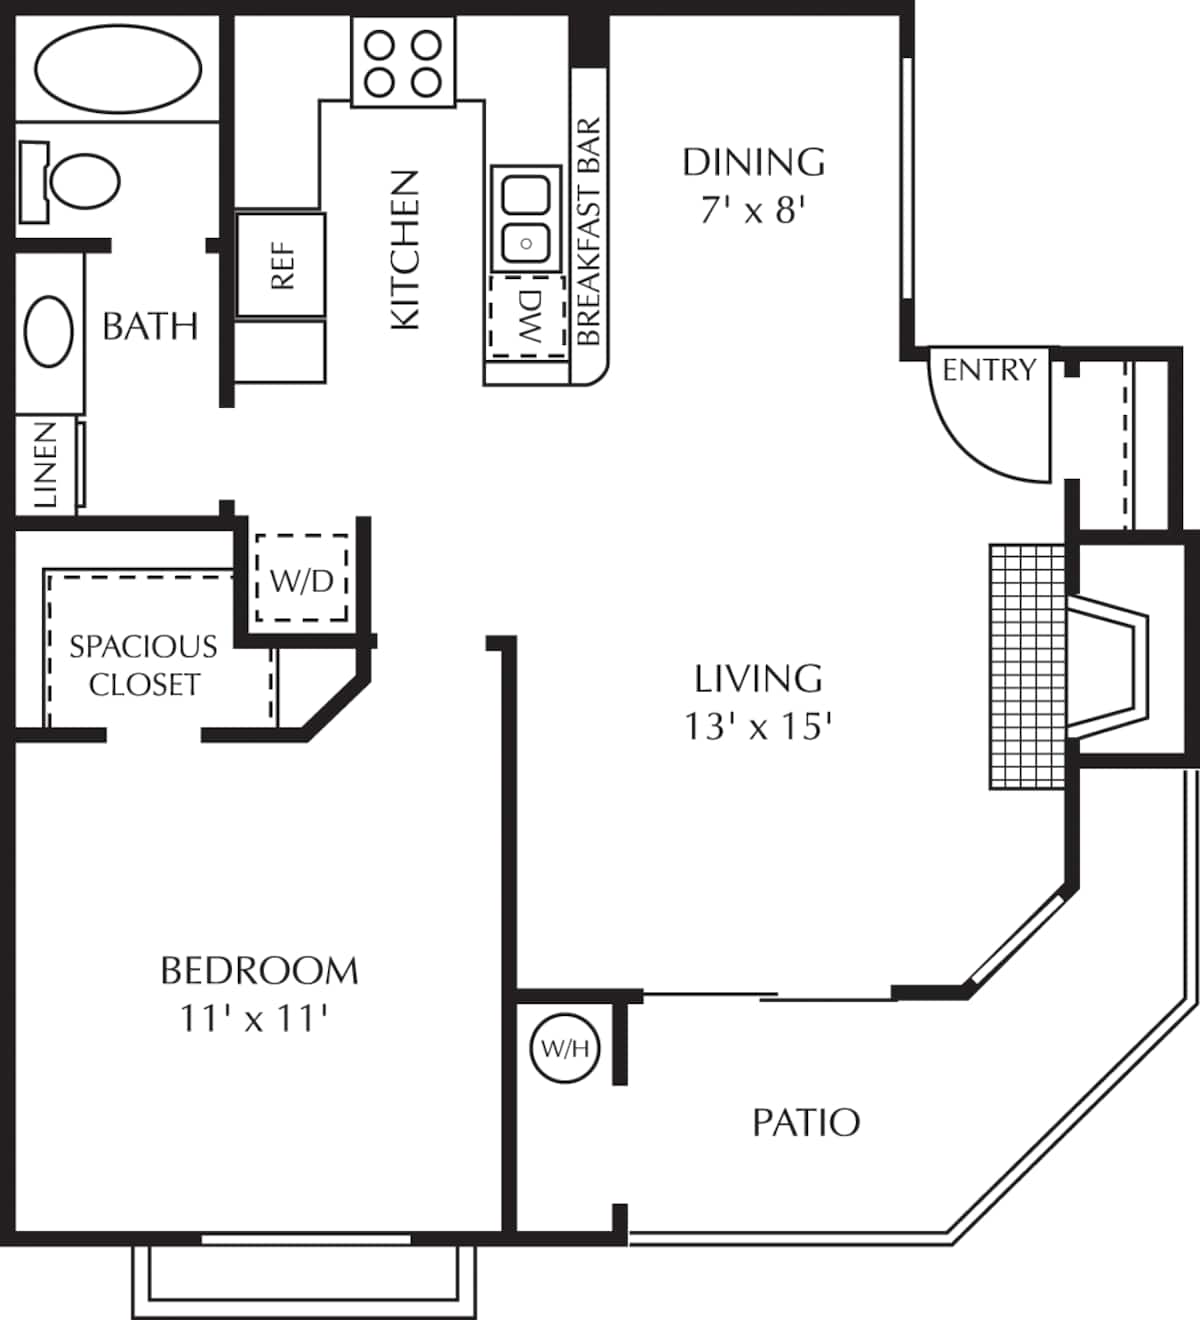 Floorplan diagram for Aliso, showing 1 bedroom